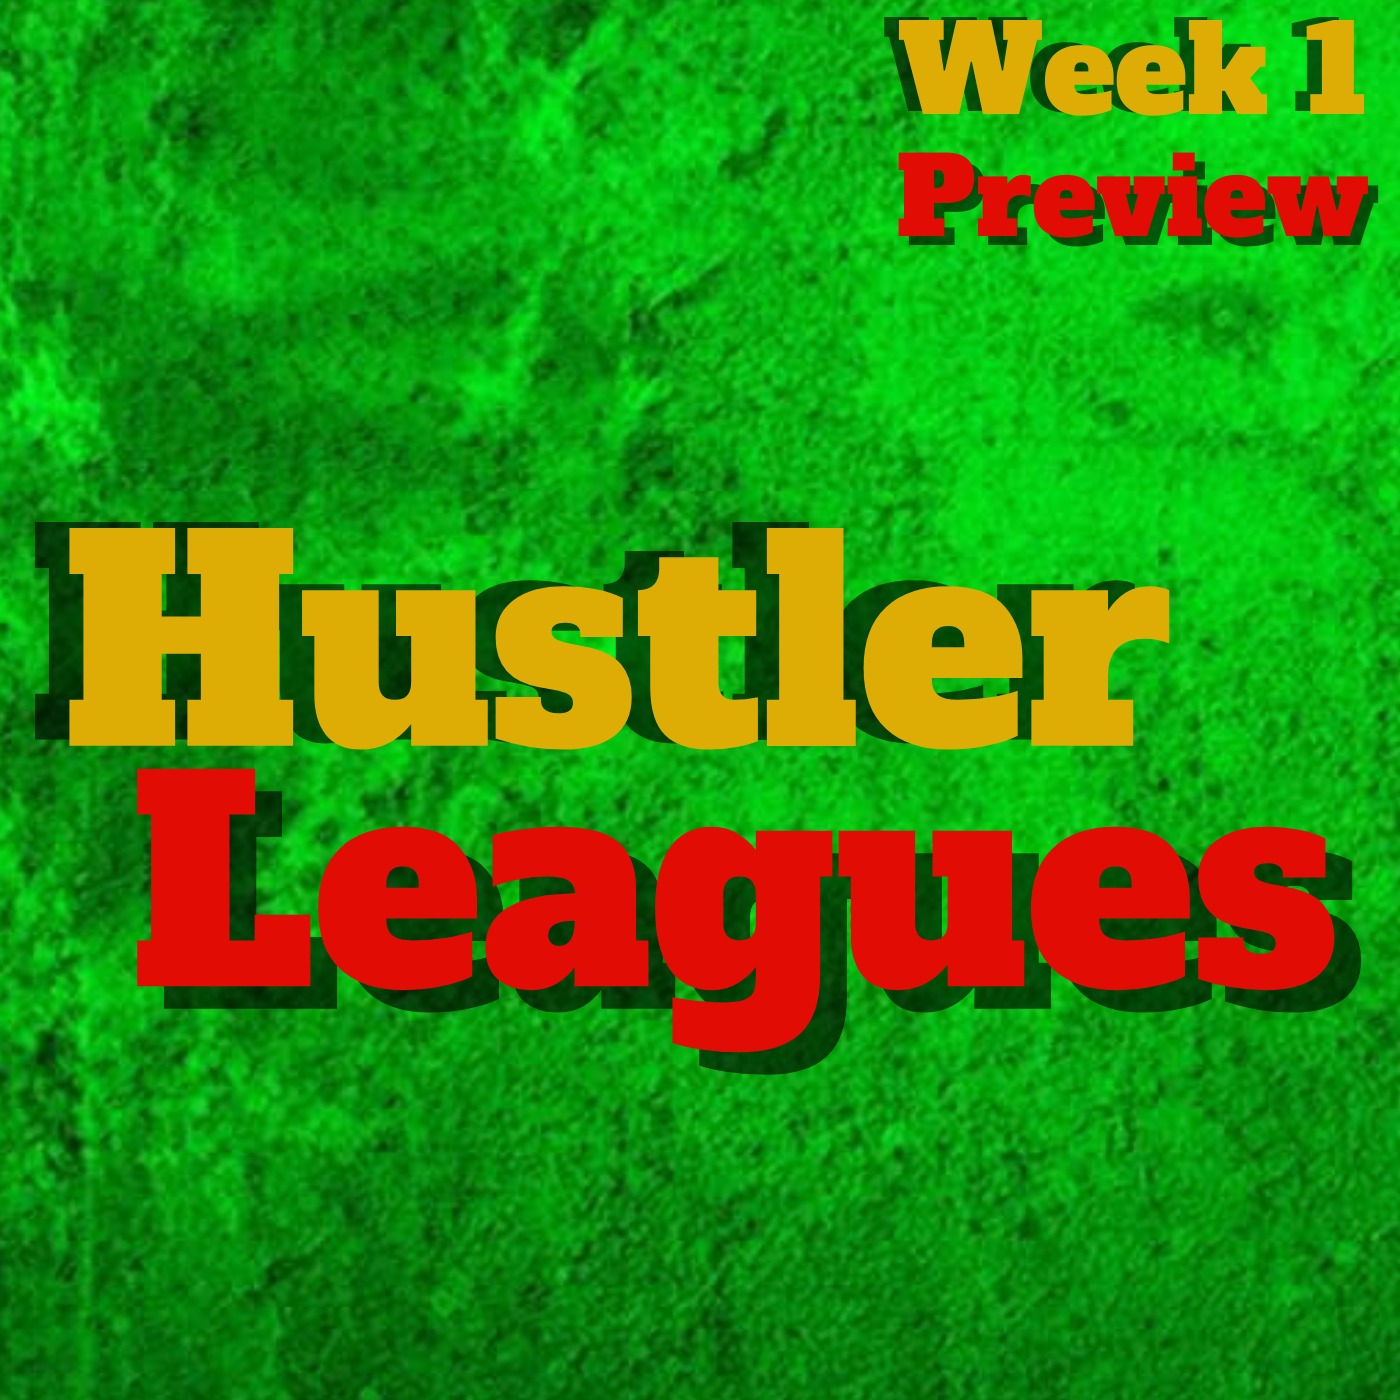 Hustler Fantasy Football Leagues Week 1 Preview Image